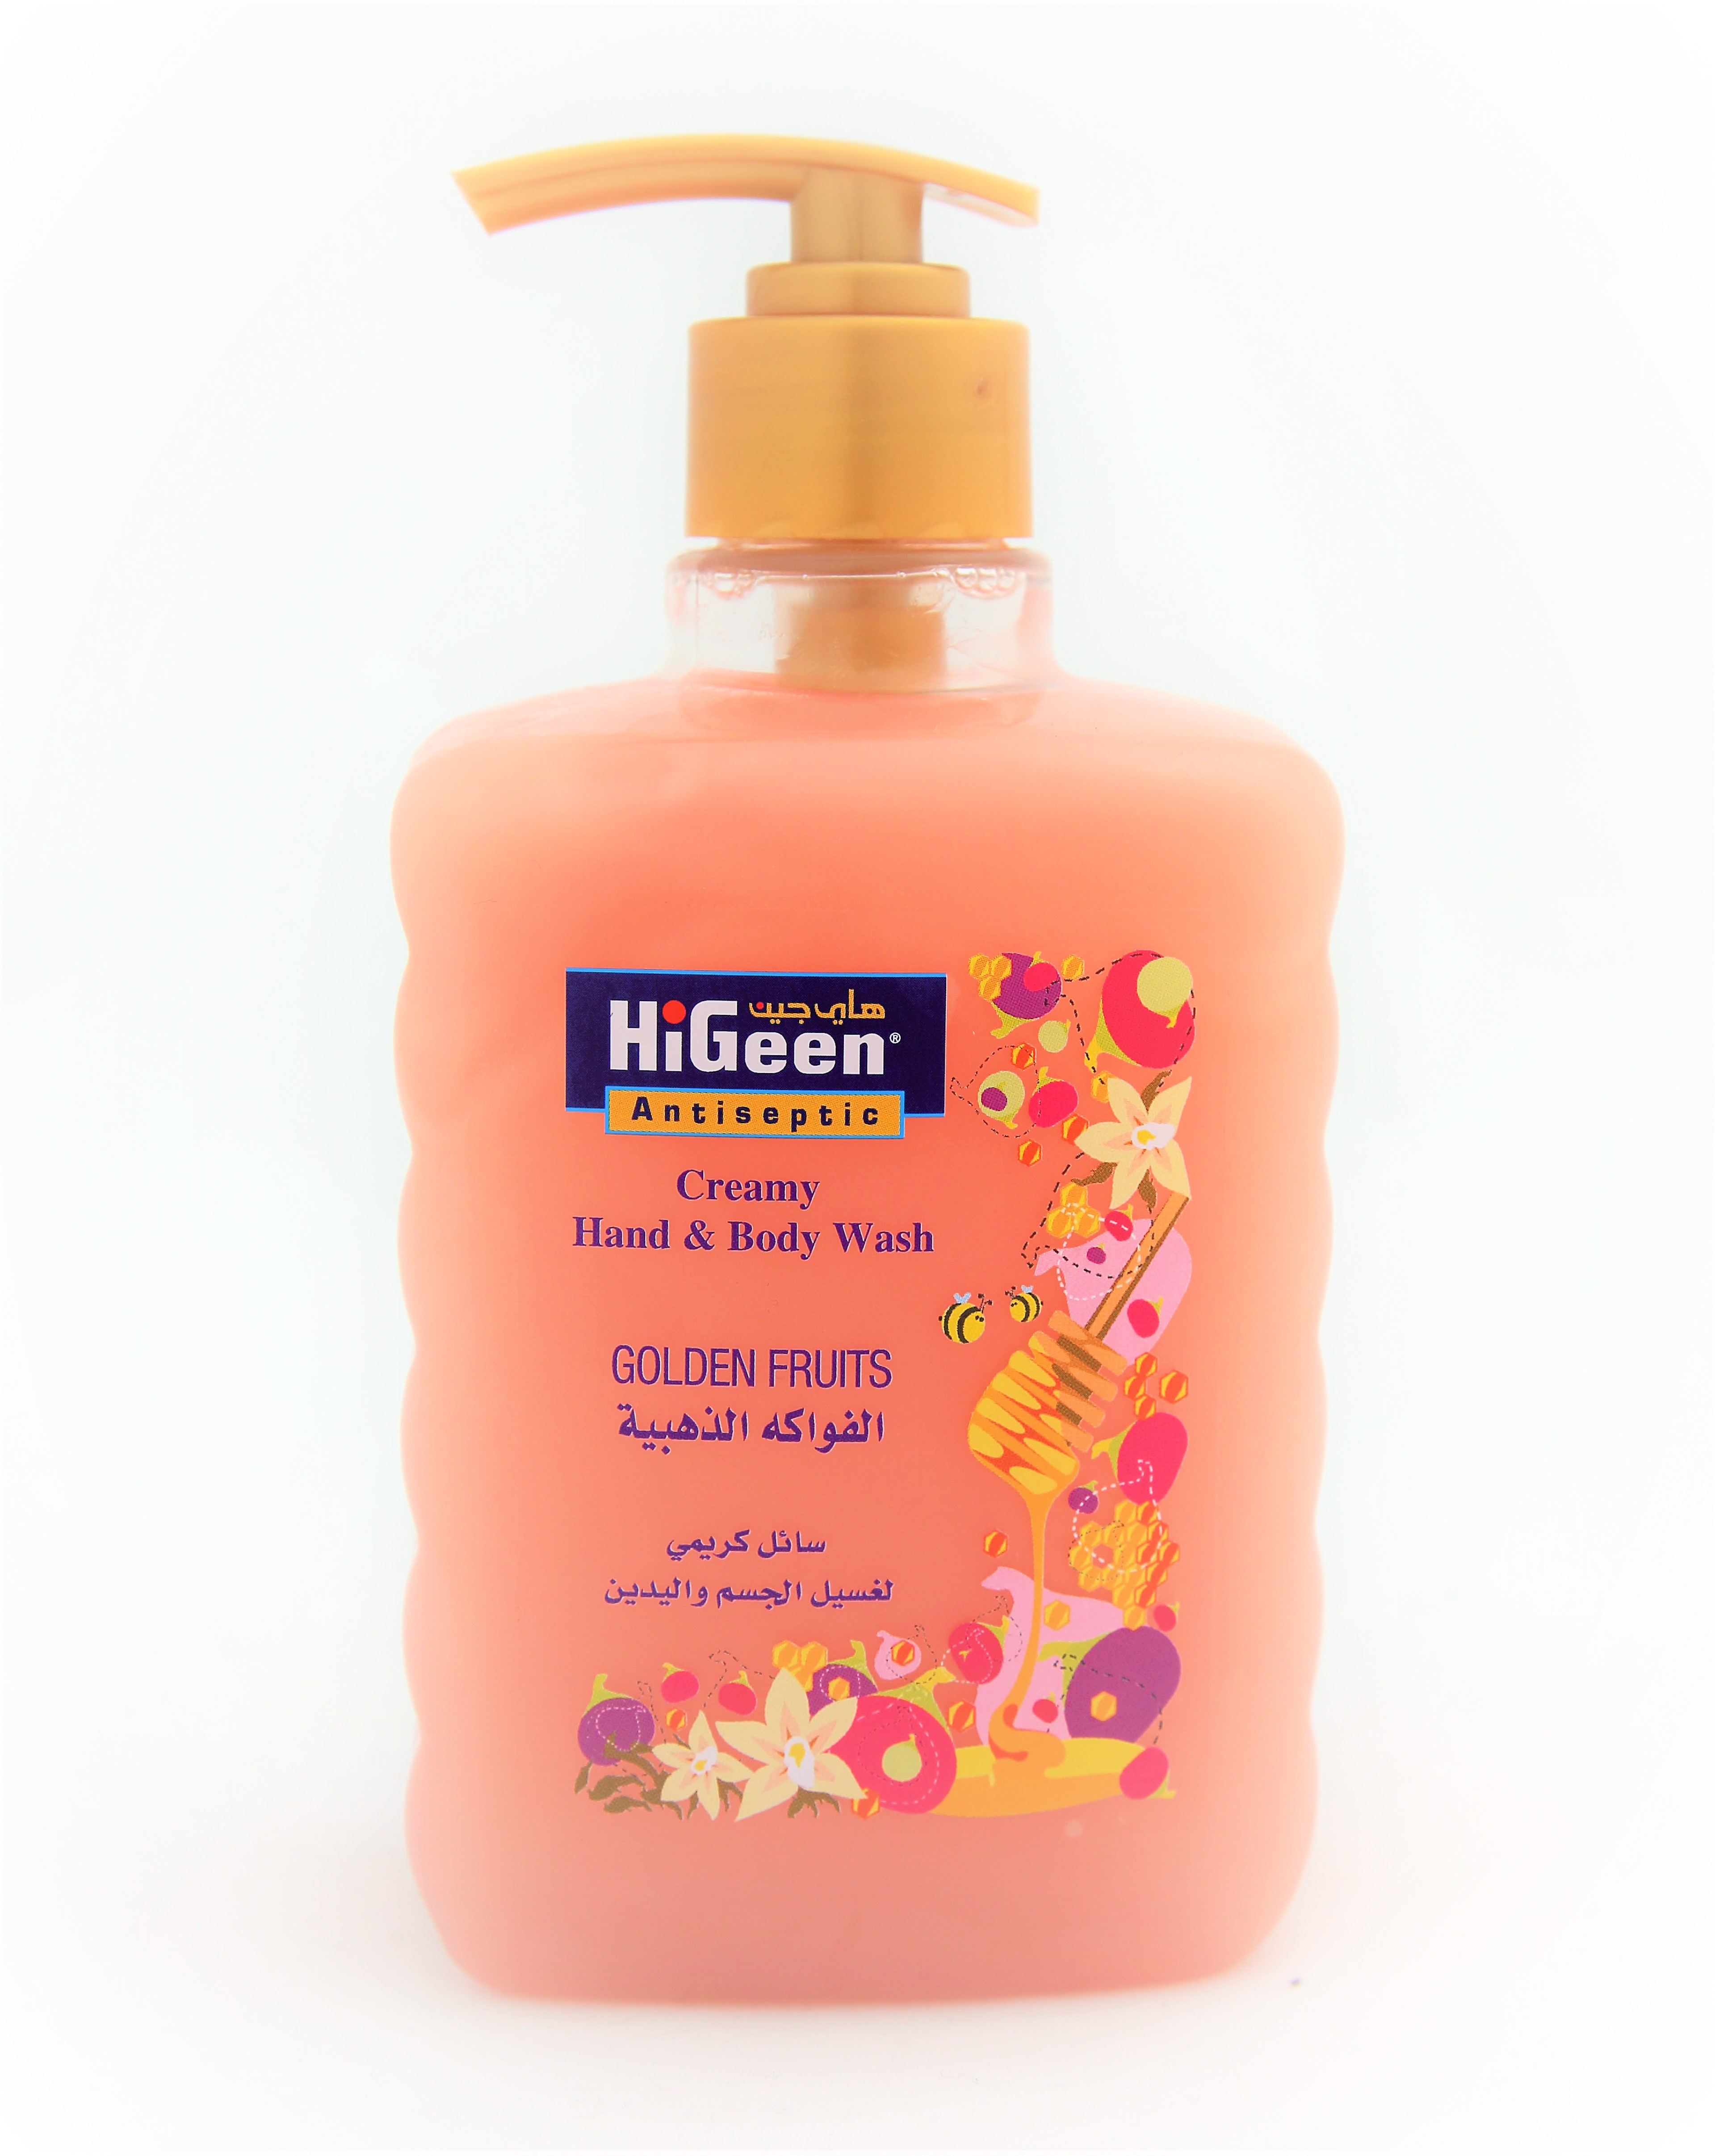 HiGeen Creamy Hand & Body Wash Golden Fruits